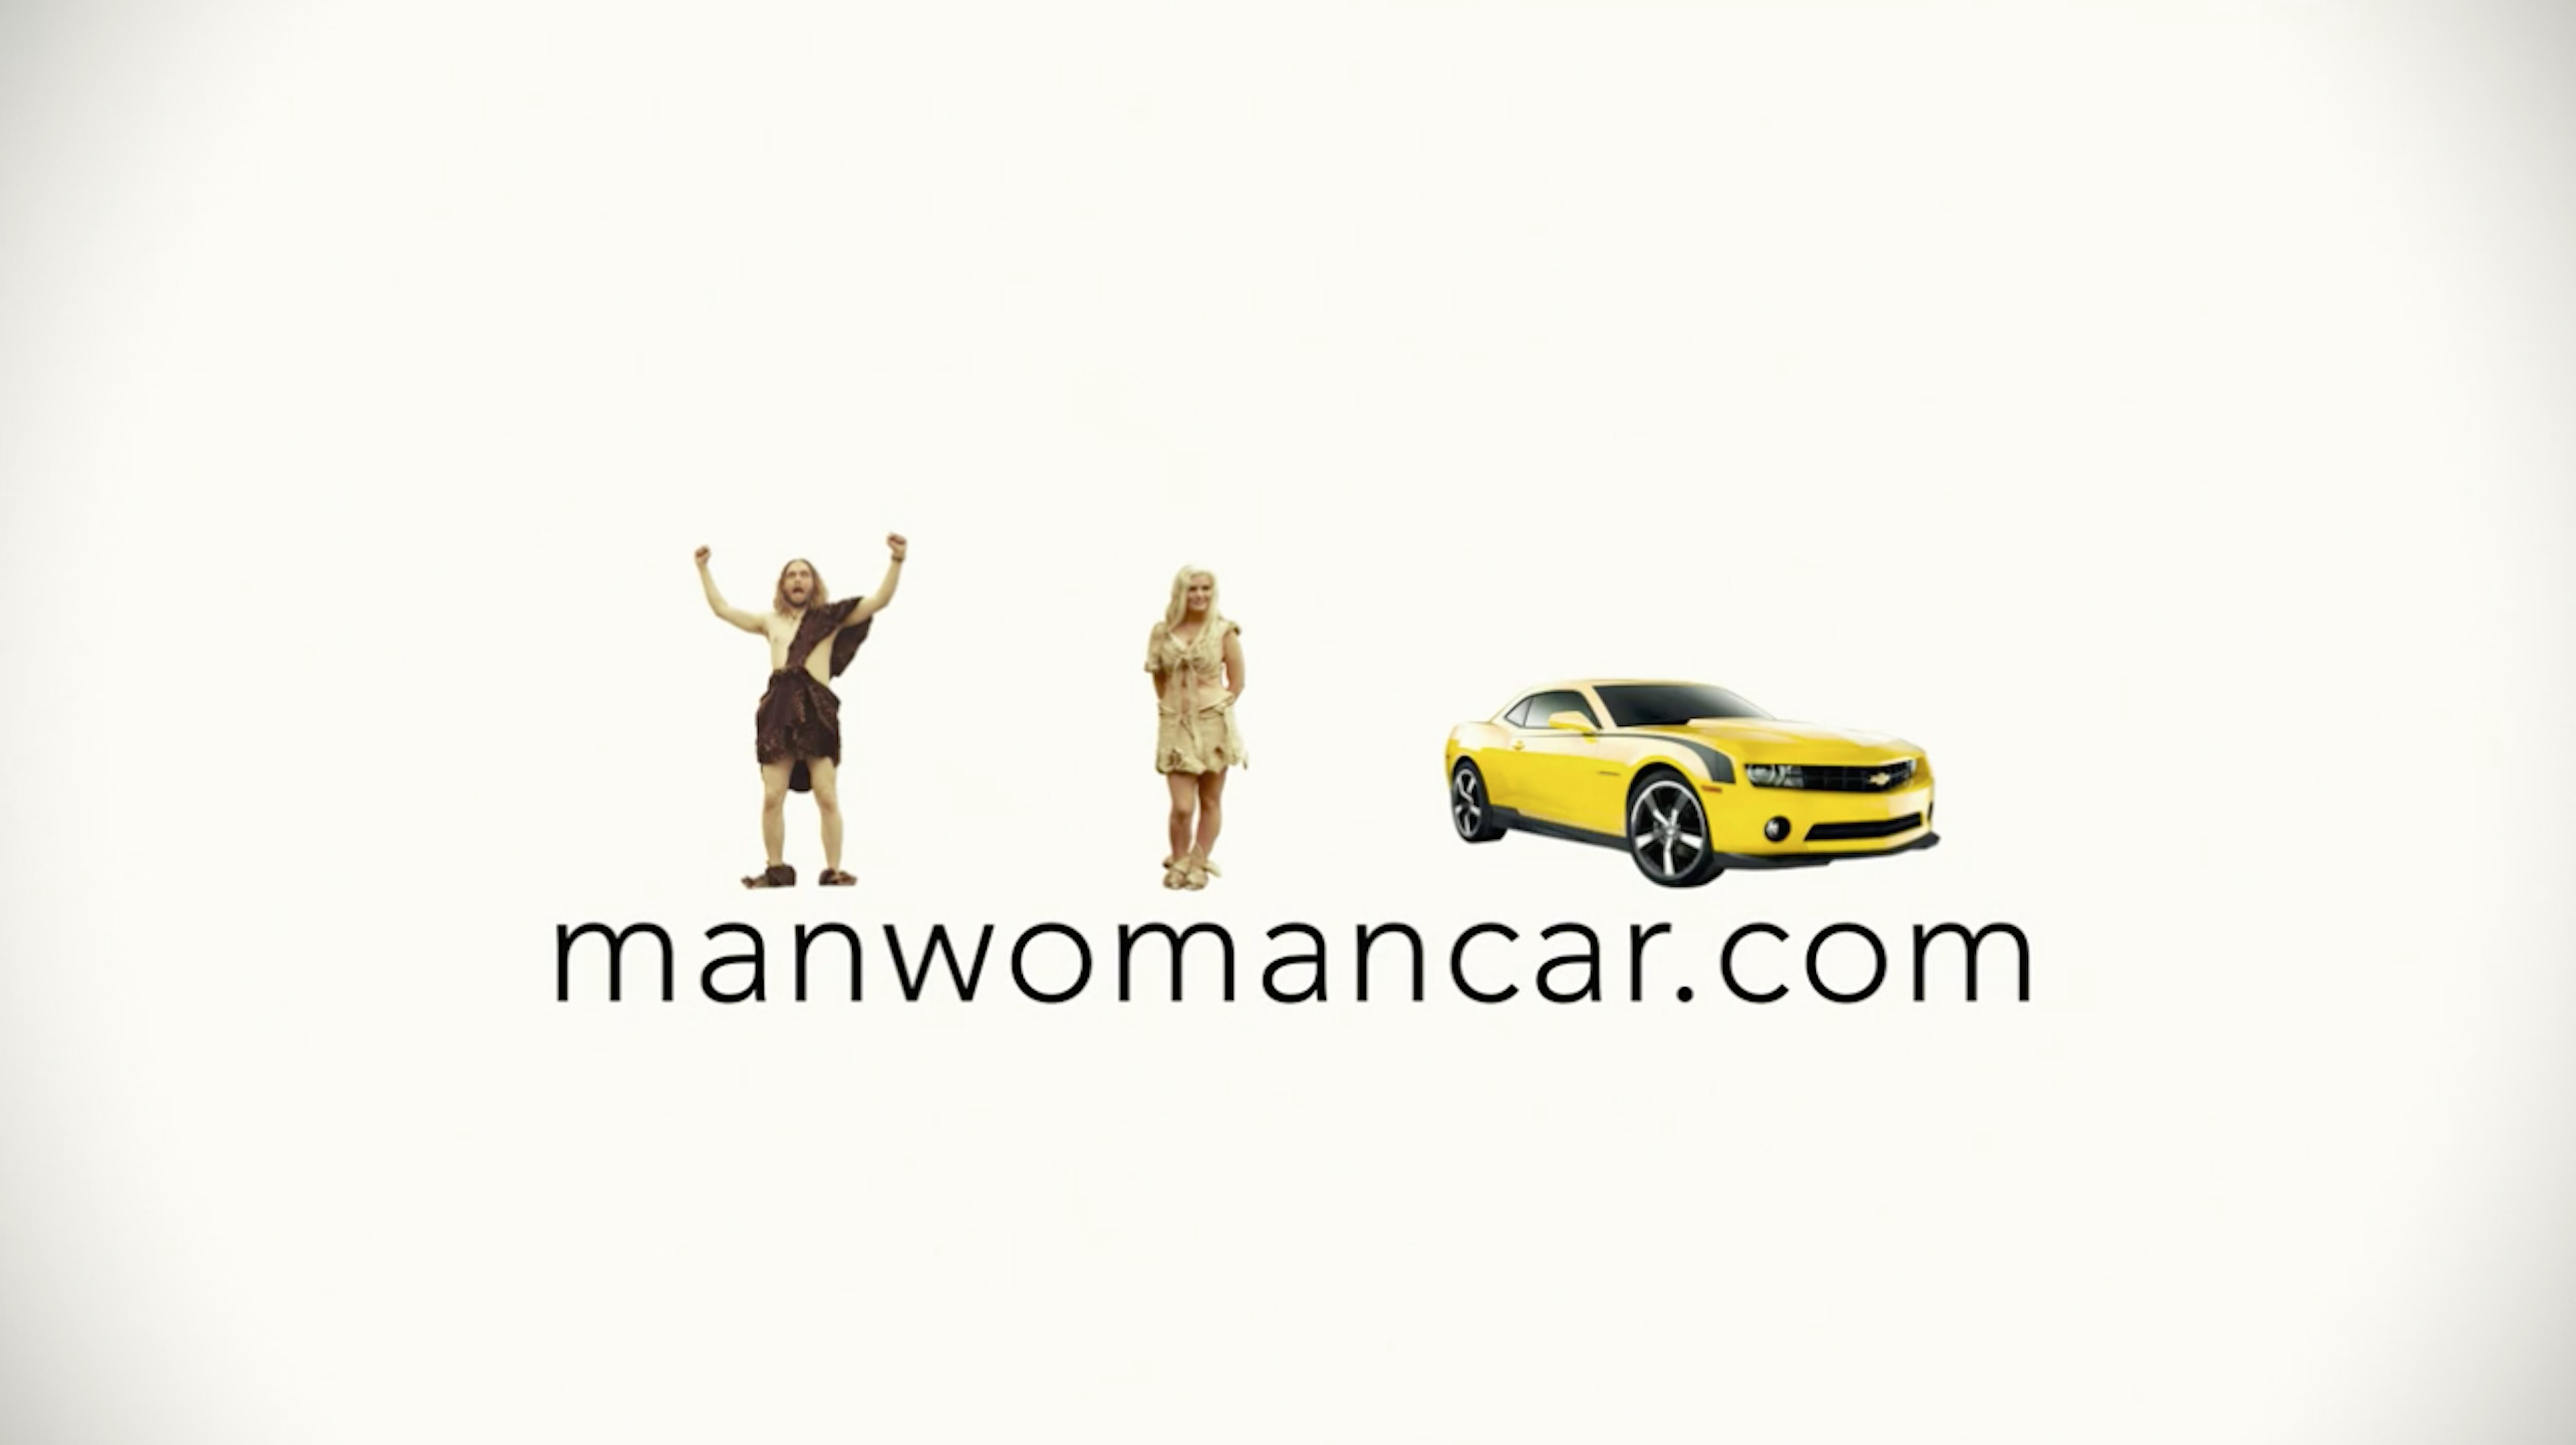 Manwomancar.com web commercial